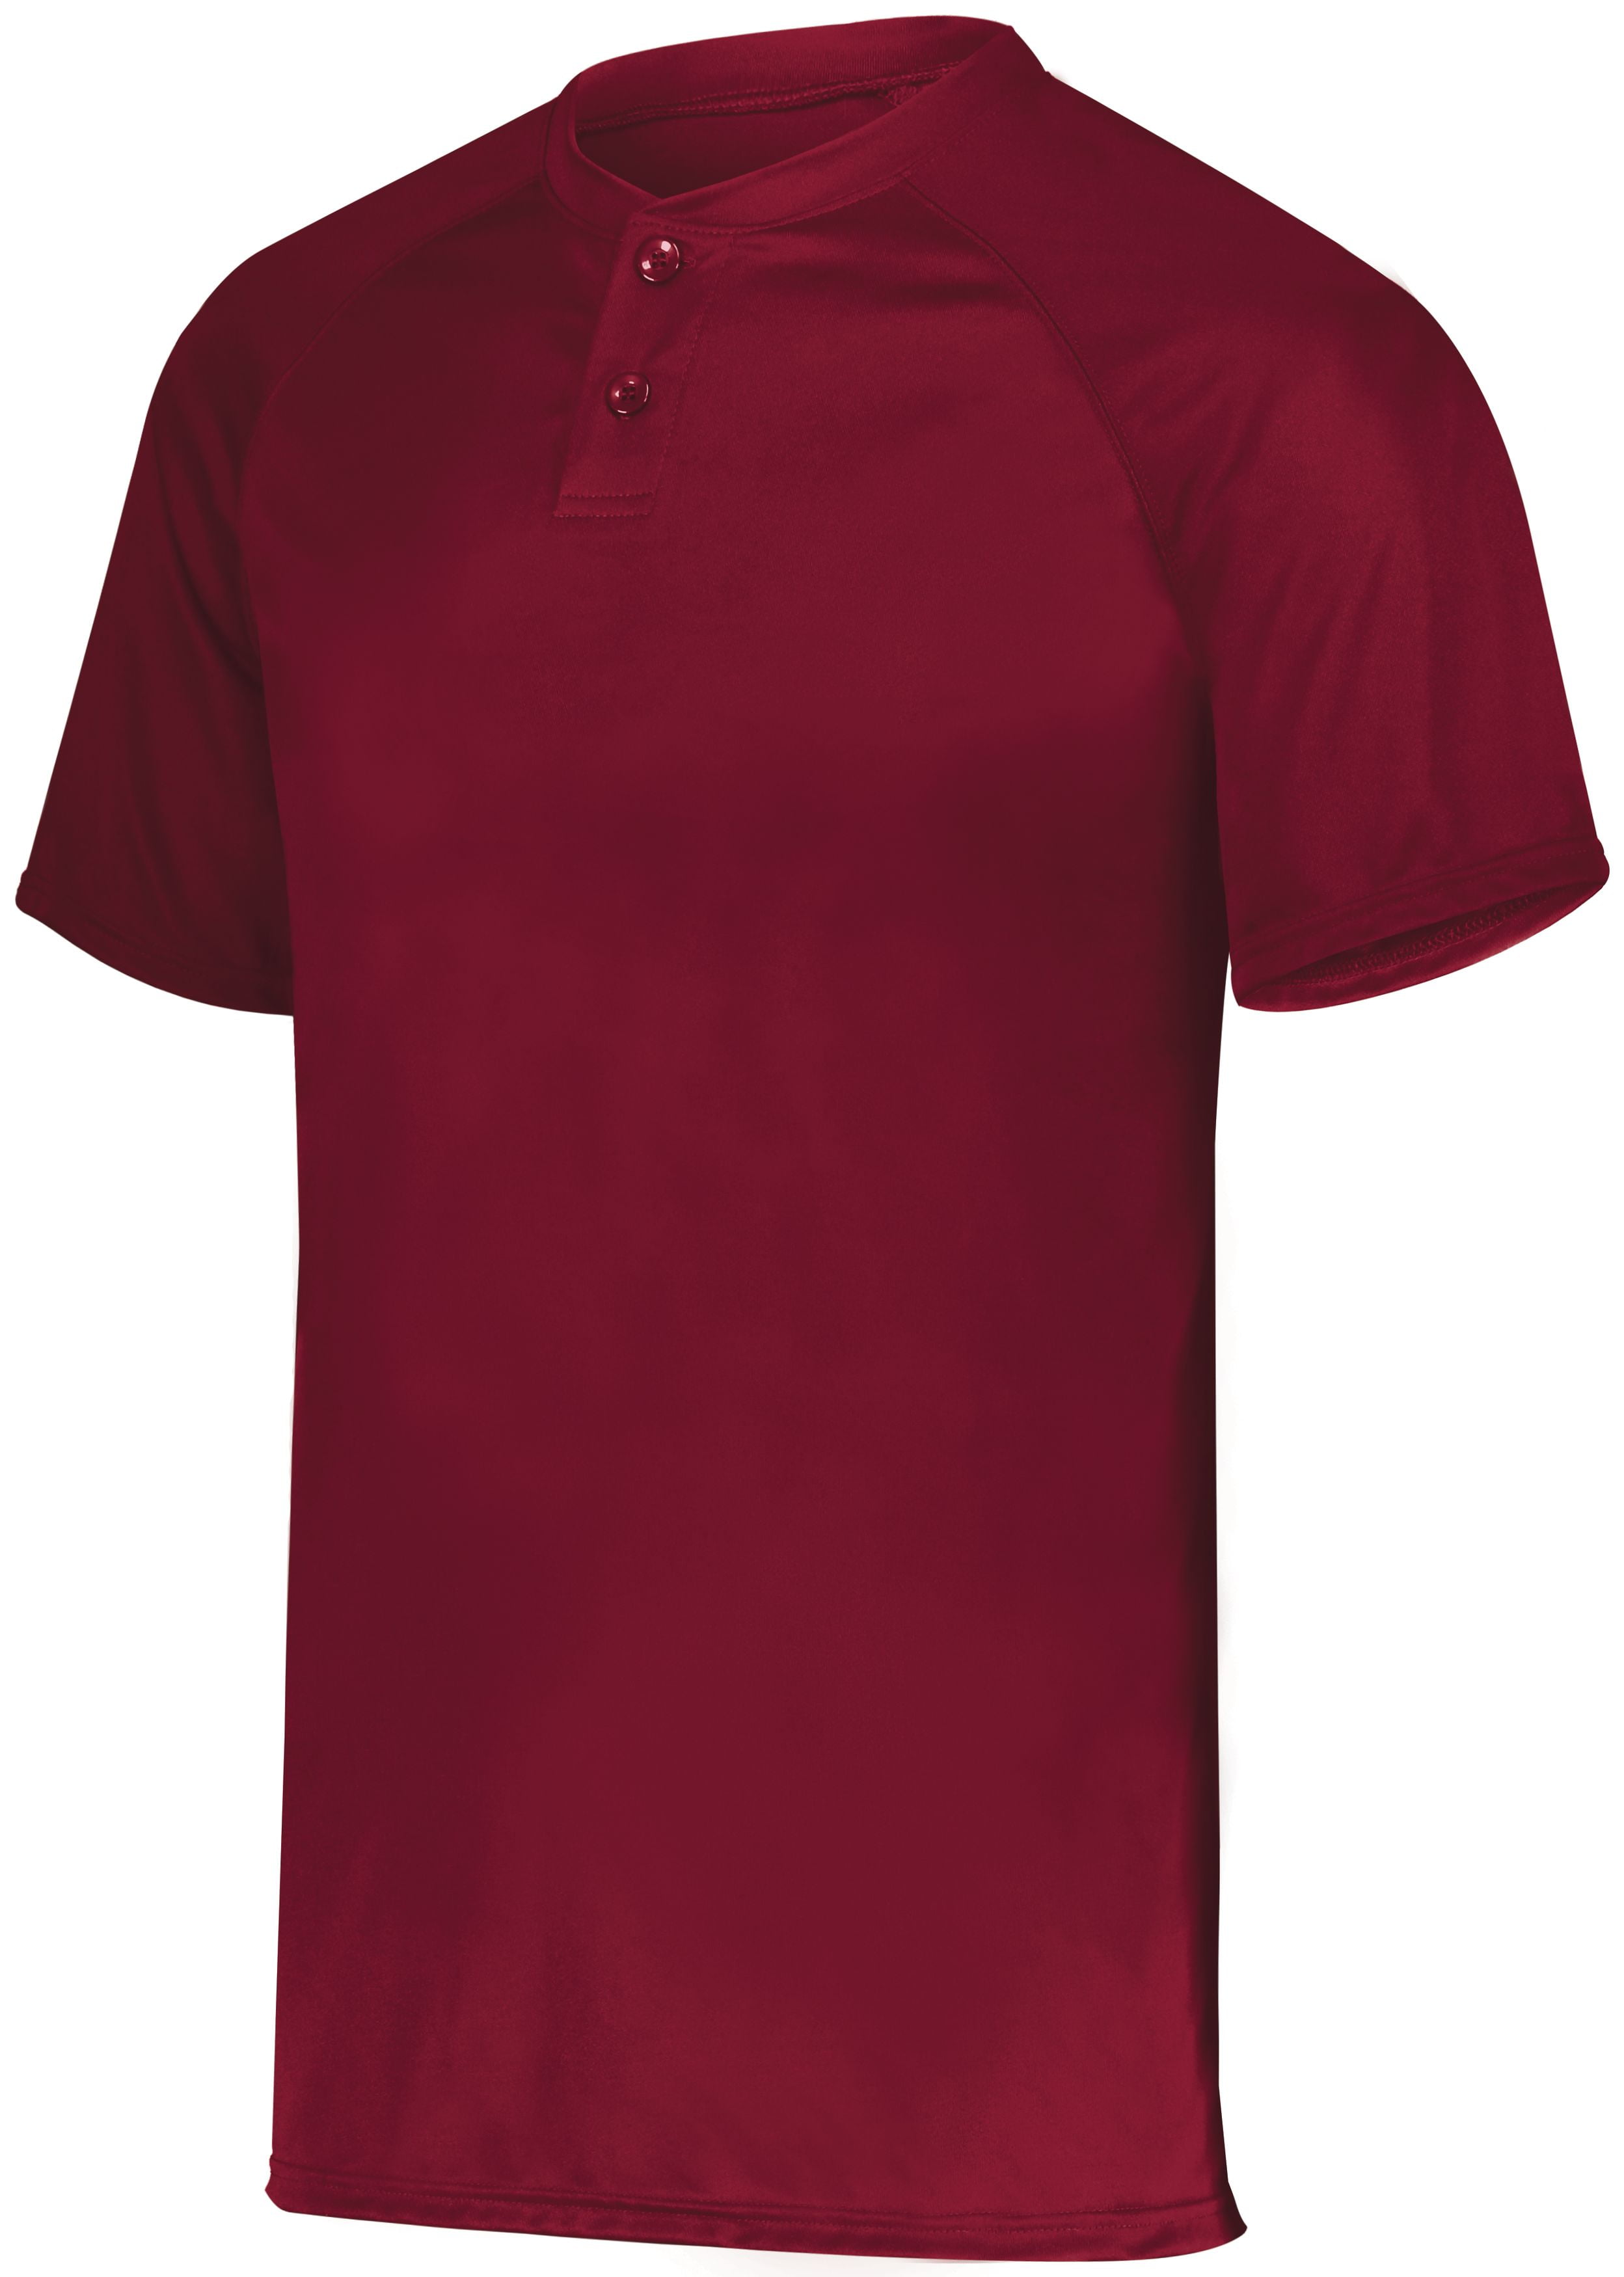 Augusta Sportswear Attain Two-Button Baseball Jersey - Navy - M